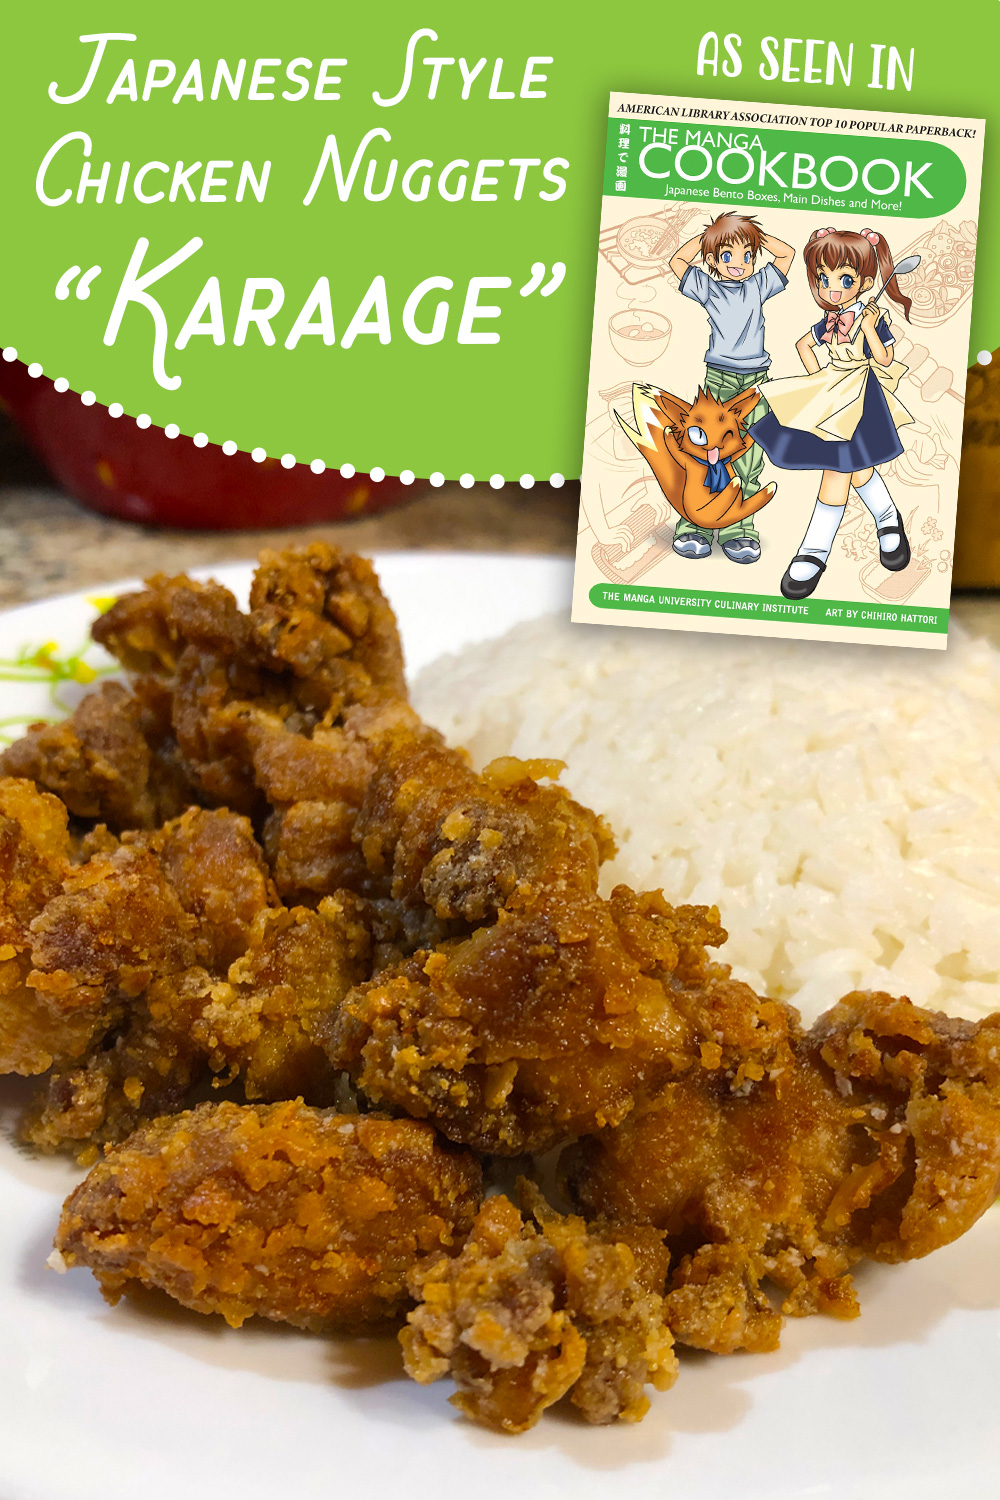 Karaage (Japanese style chicken nuggets)